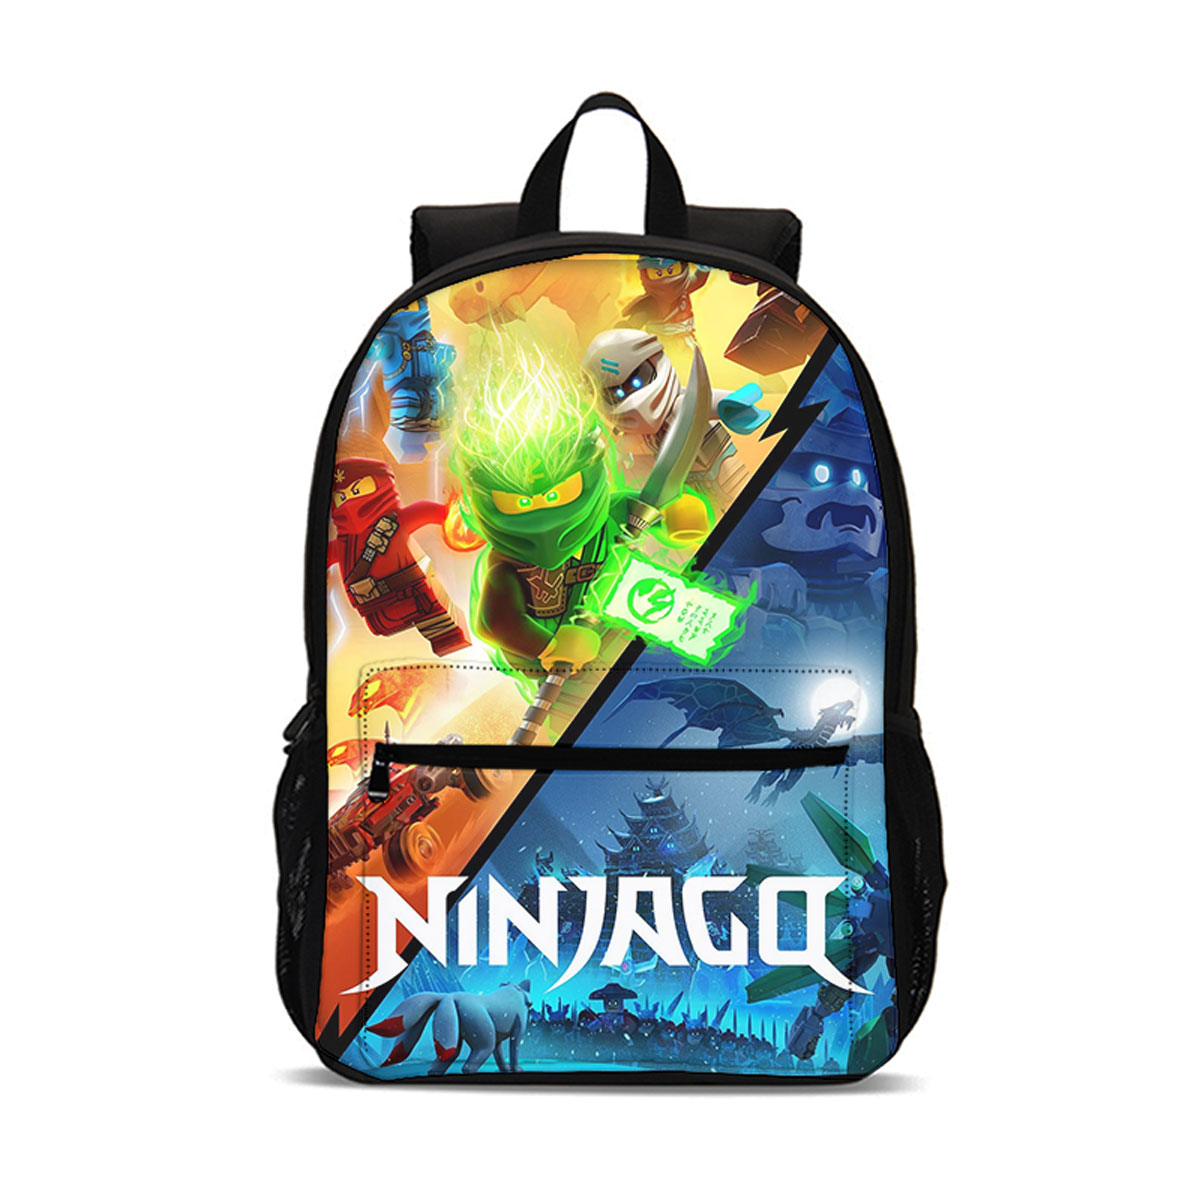 Ninjago 18 inches Backpack School Bag for Kids Large Capacity